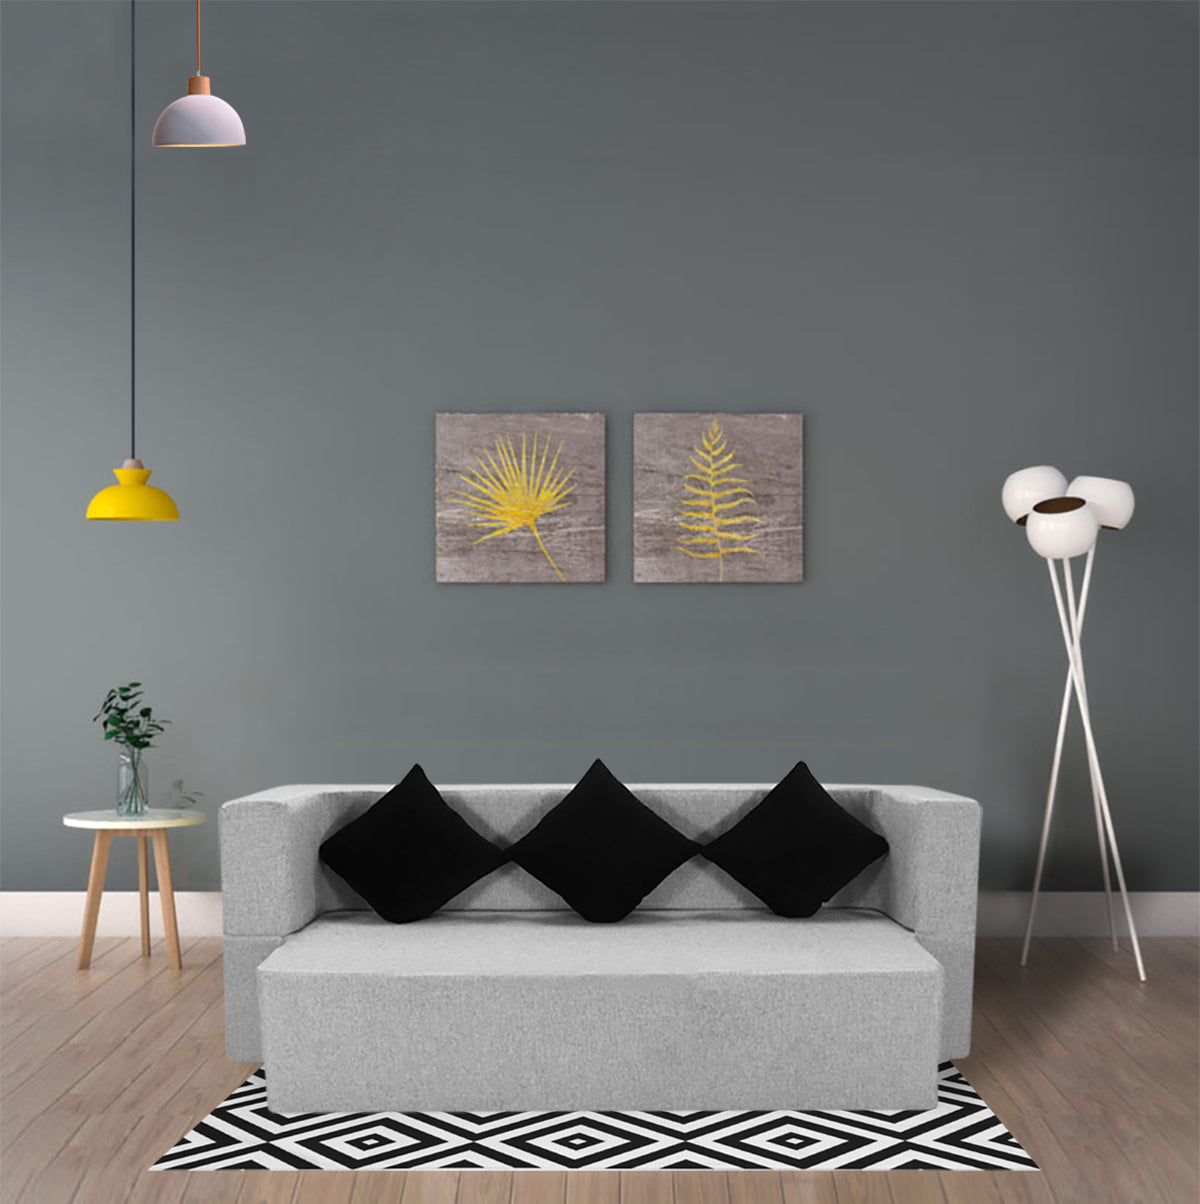 Light Grey Jute Fabric (72"X44"X14") FlipperX Sofa cum Bed With 3 Black Cushions